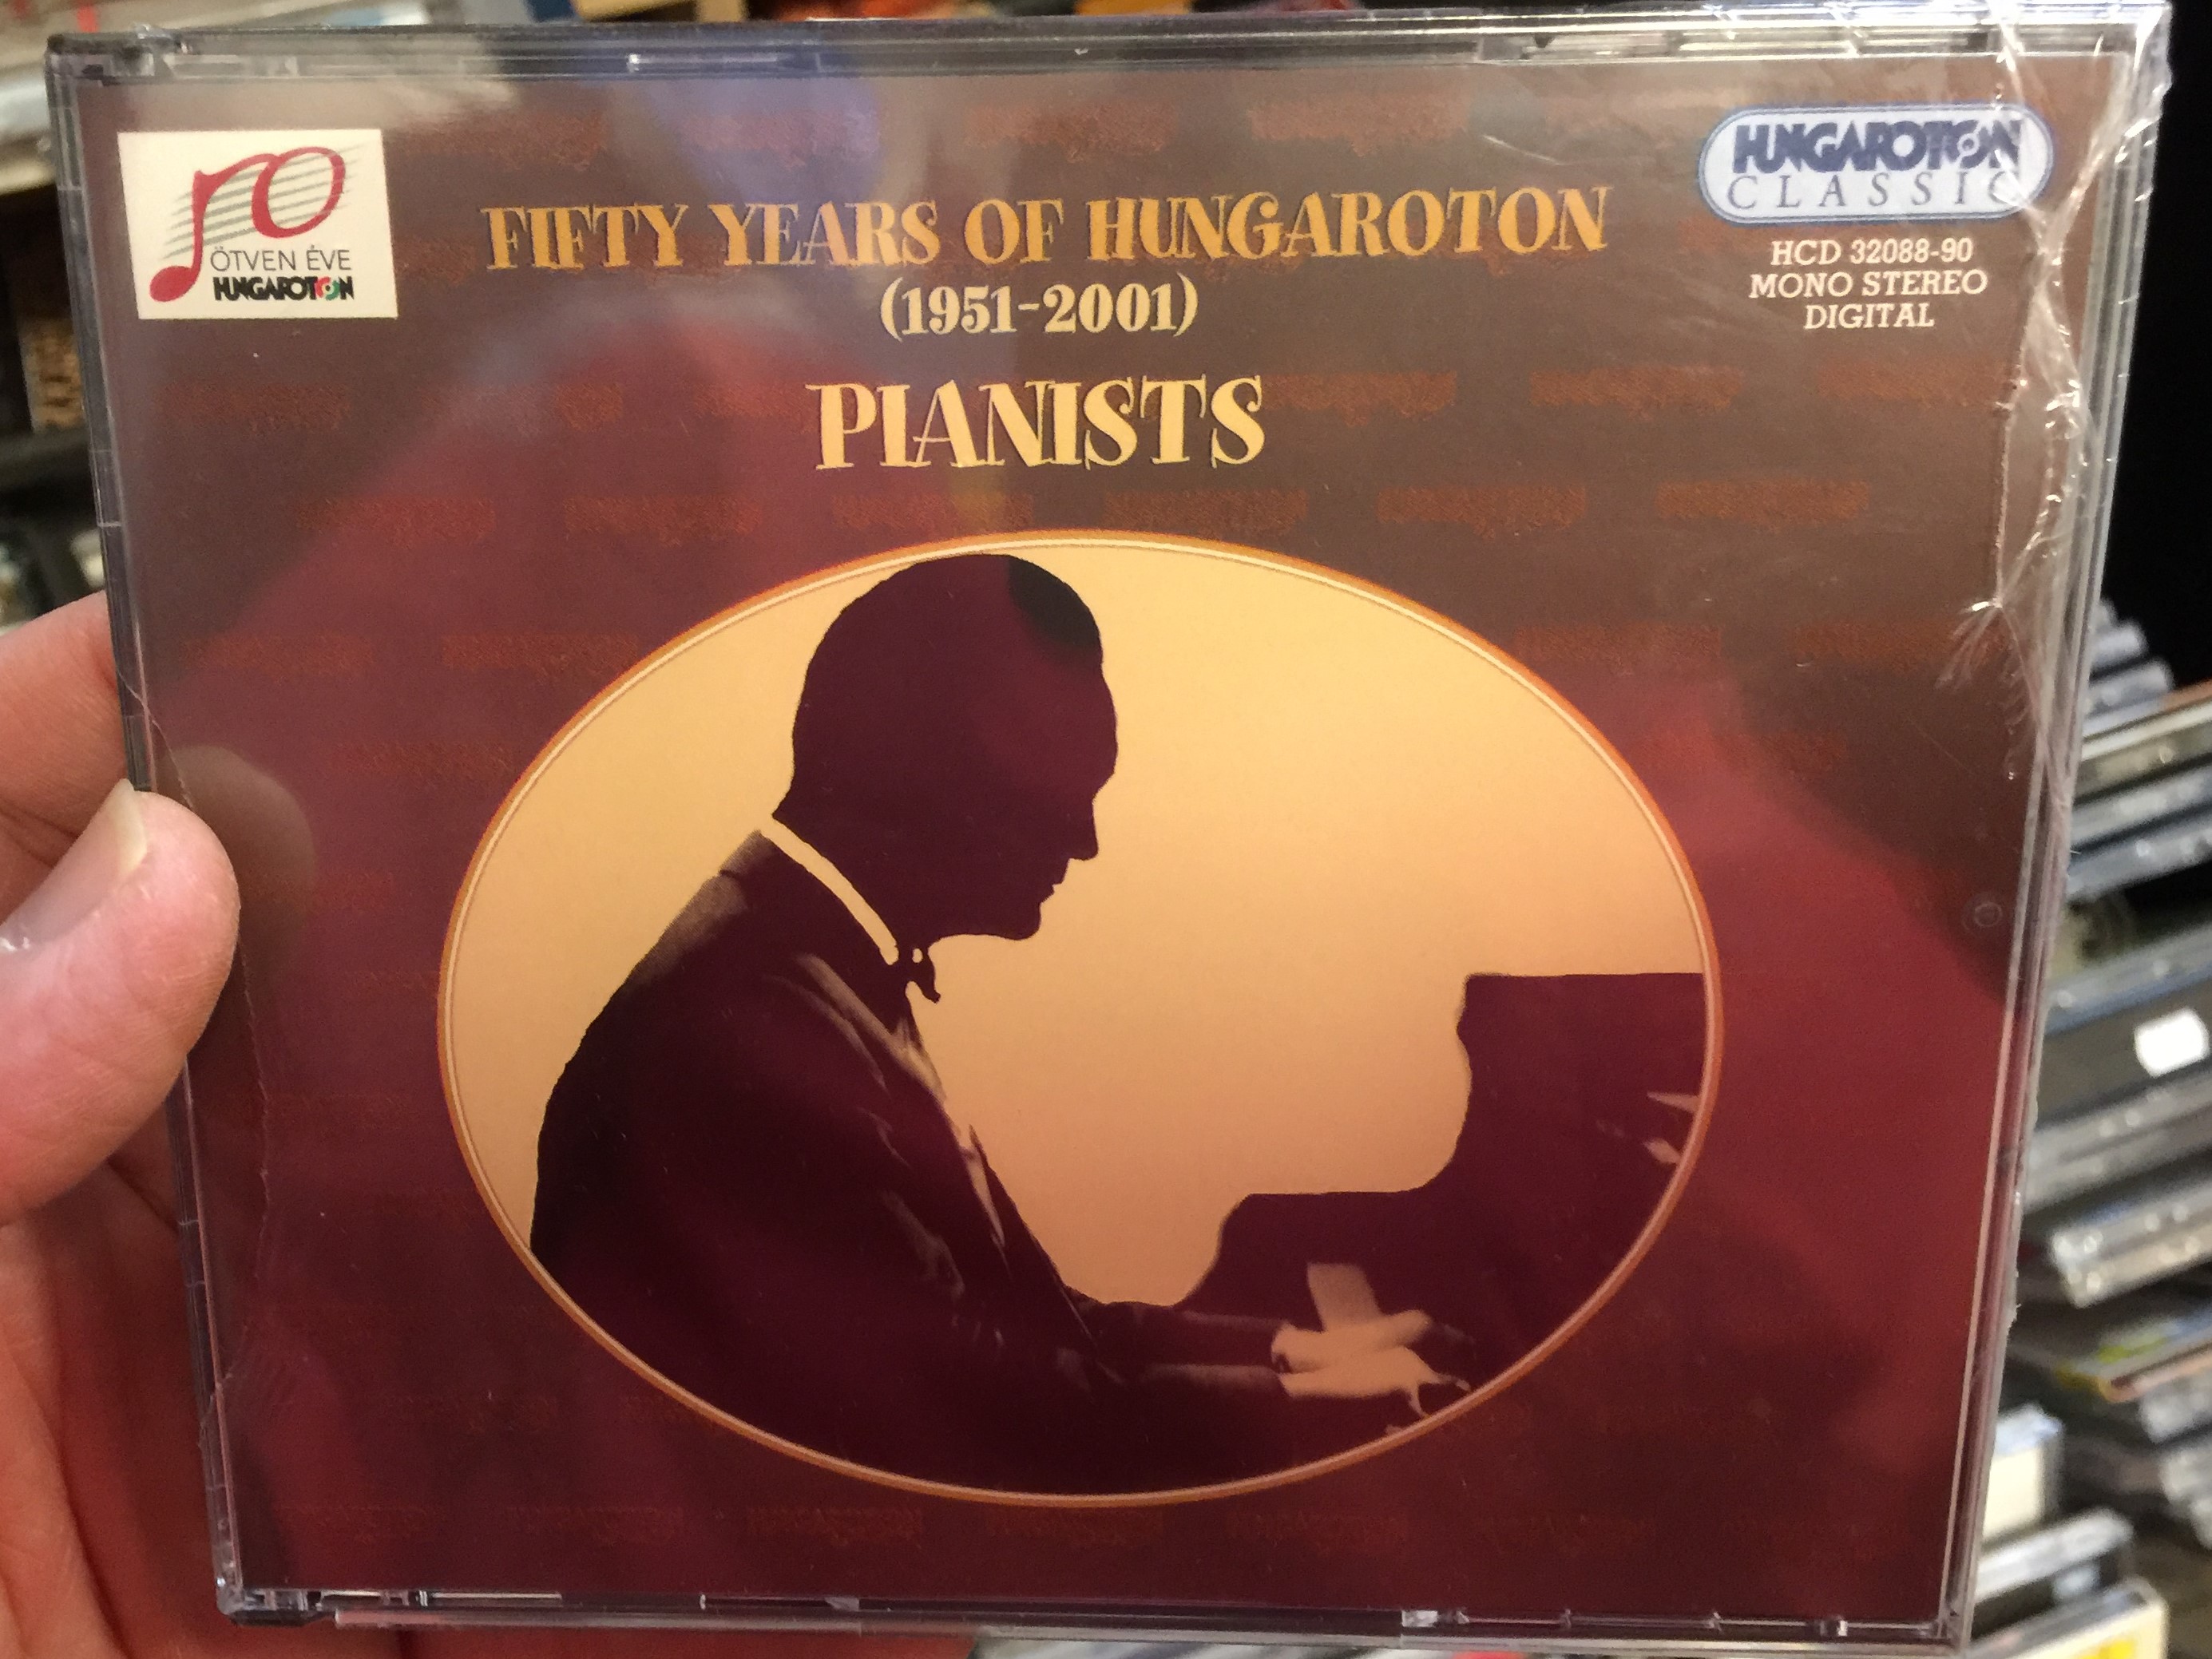 fifty-years-of-hungaroton-1951-2001-pianists-hungaroton-classic-3x-audio-cd-2001-mono-stereo-hcd-32088-90-1-.jpg